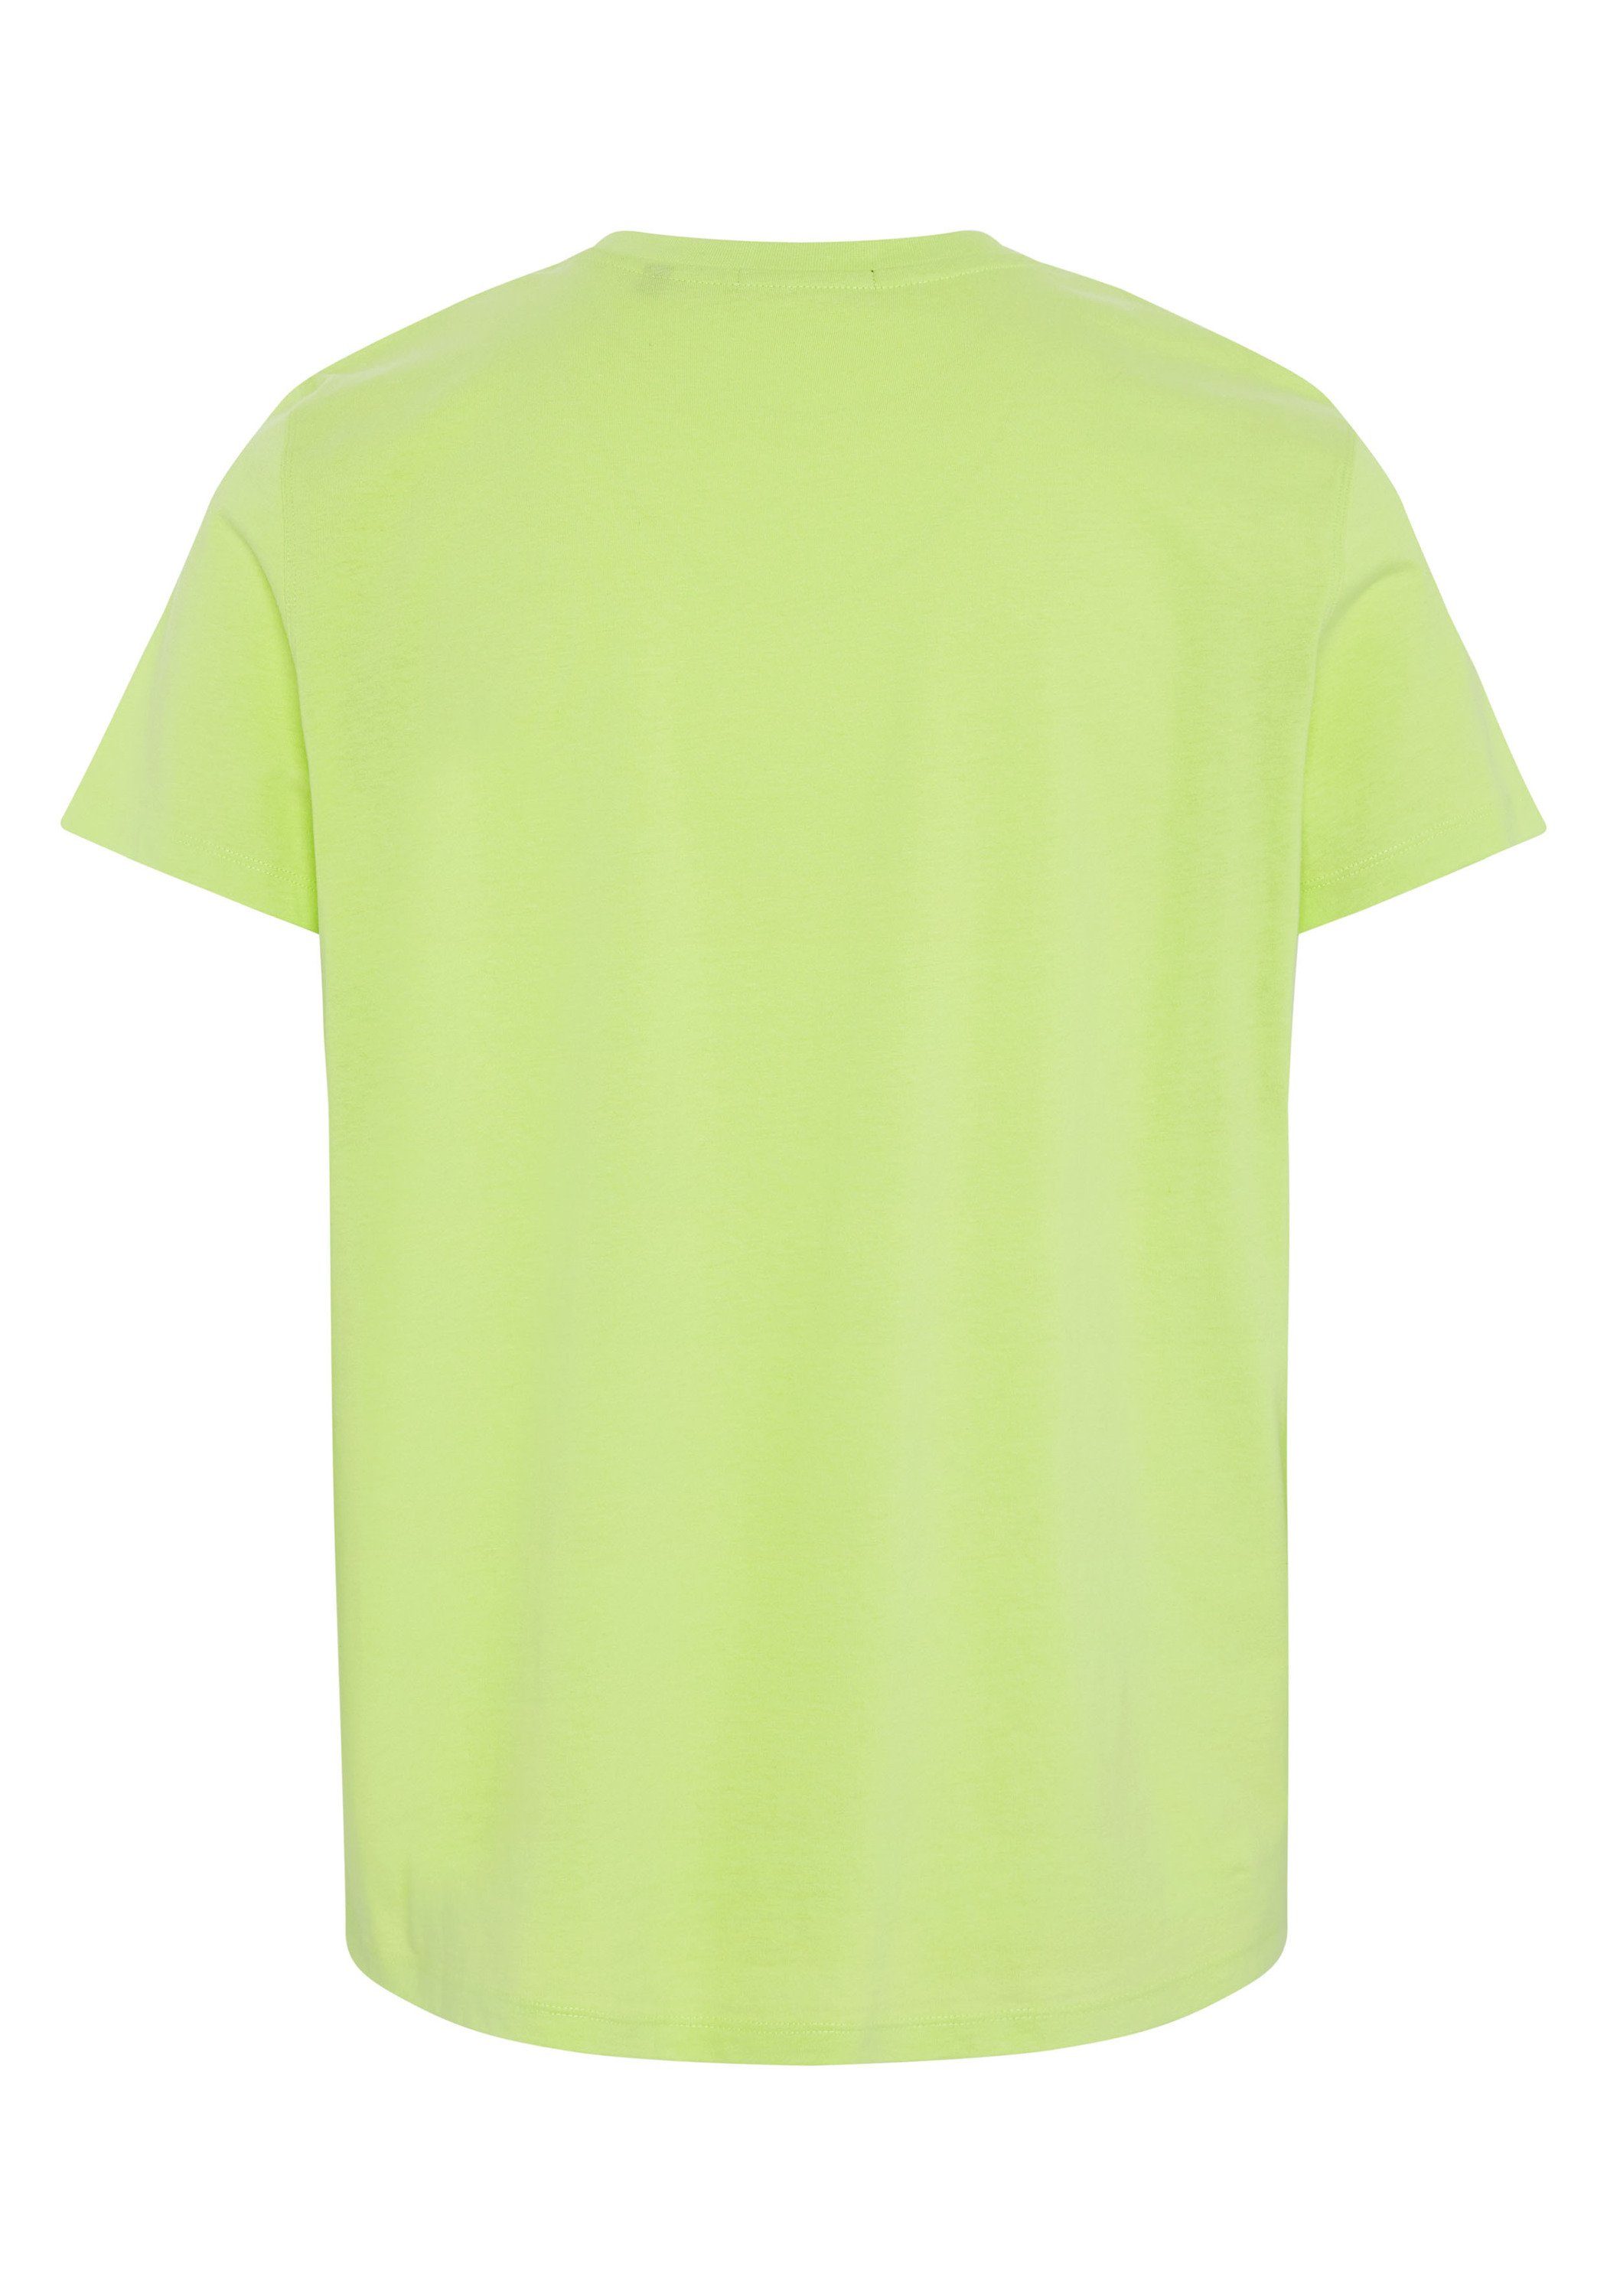 Green Print-Shirt Sharp 13-0535 Baumwolle in T-Shirt Two-Tone-Optik Chiemsee aus 1